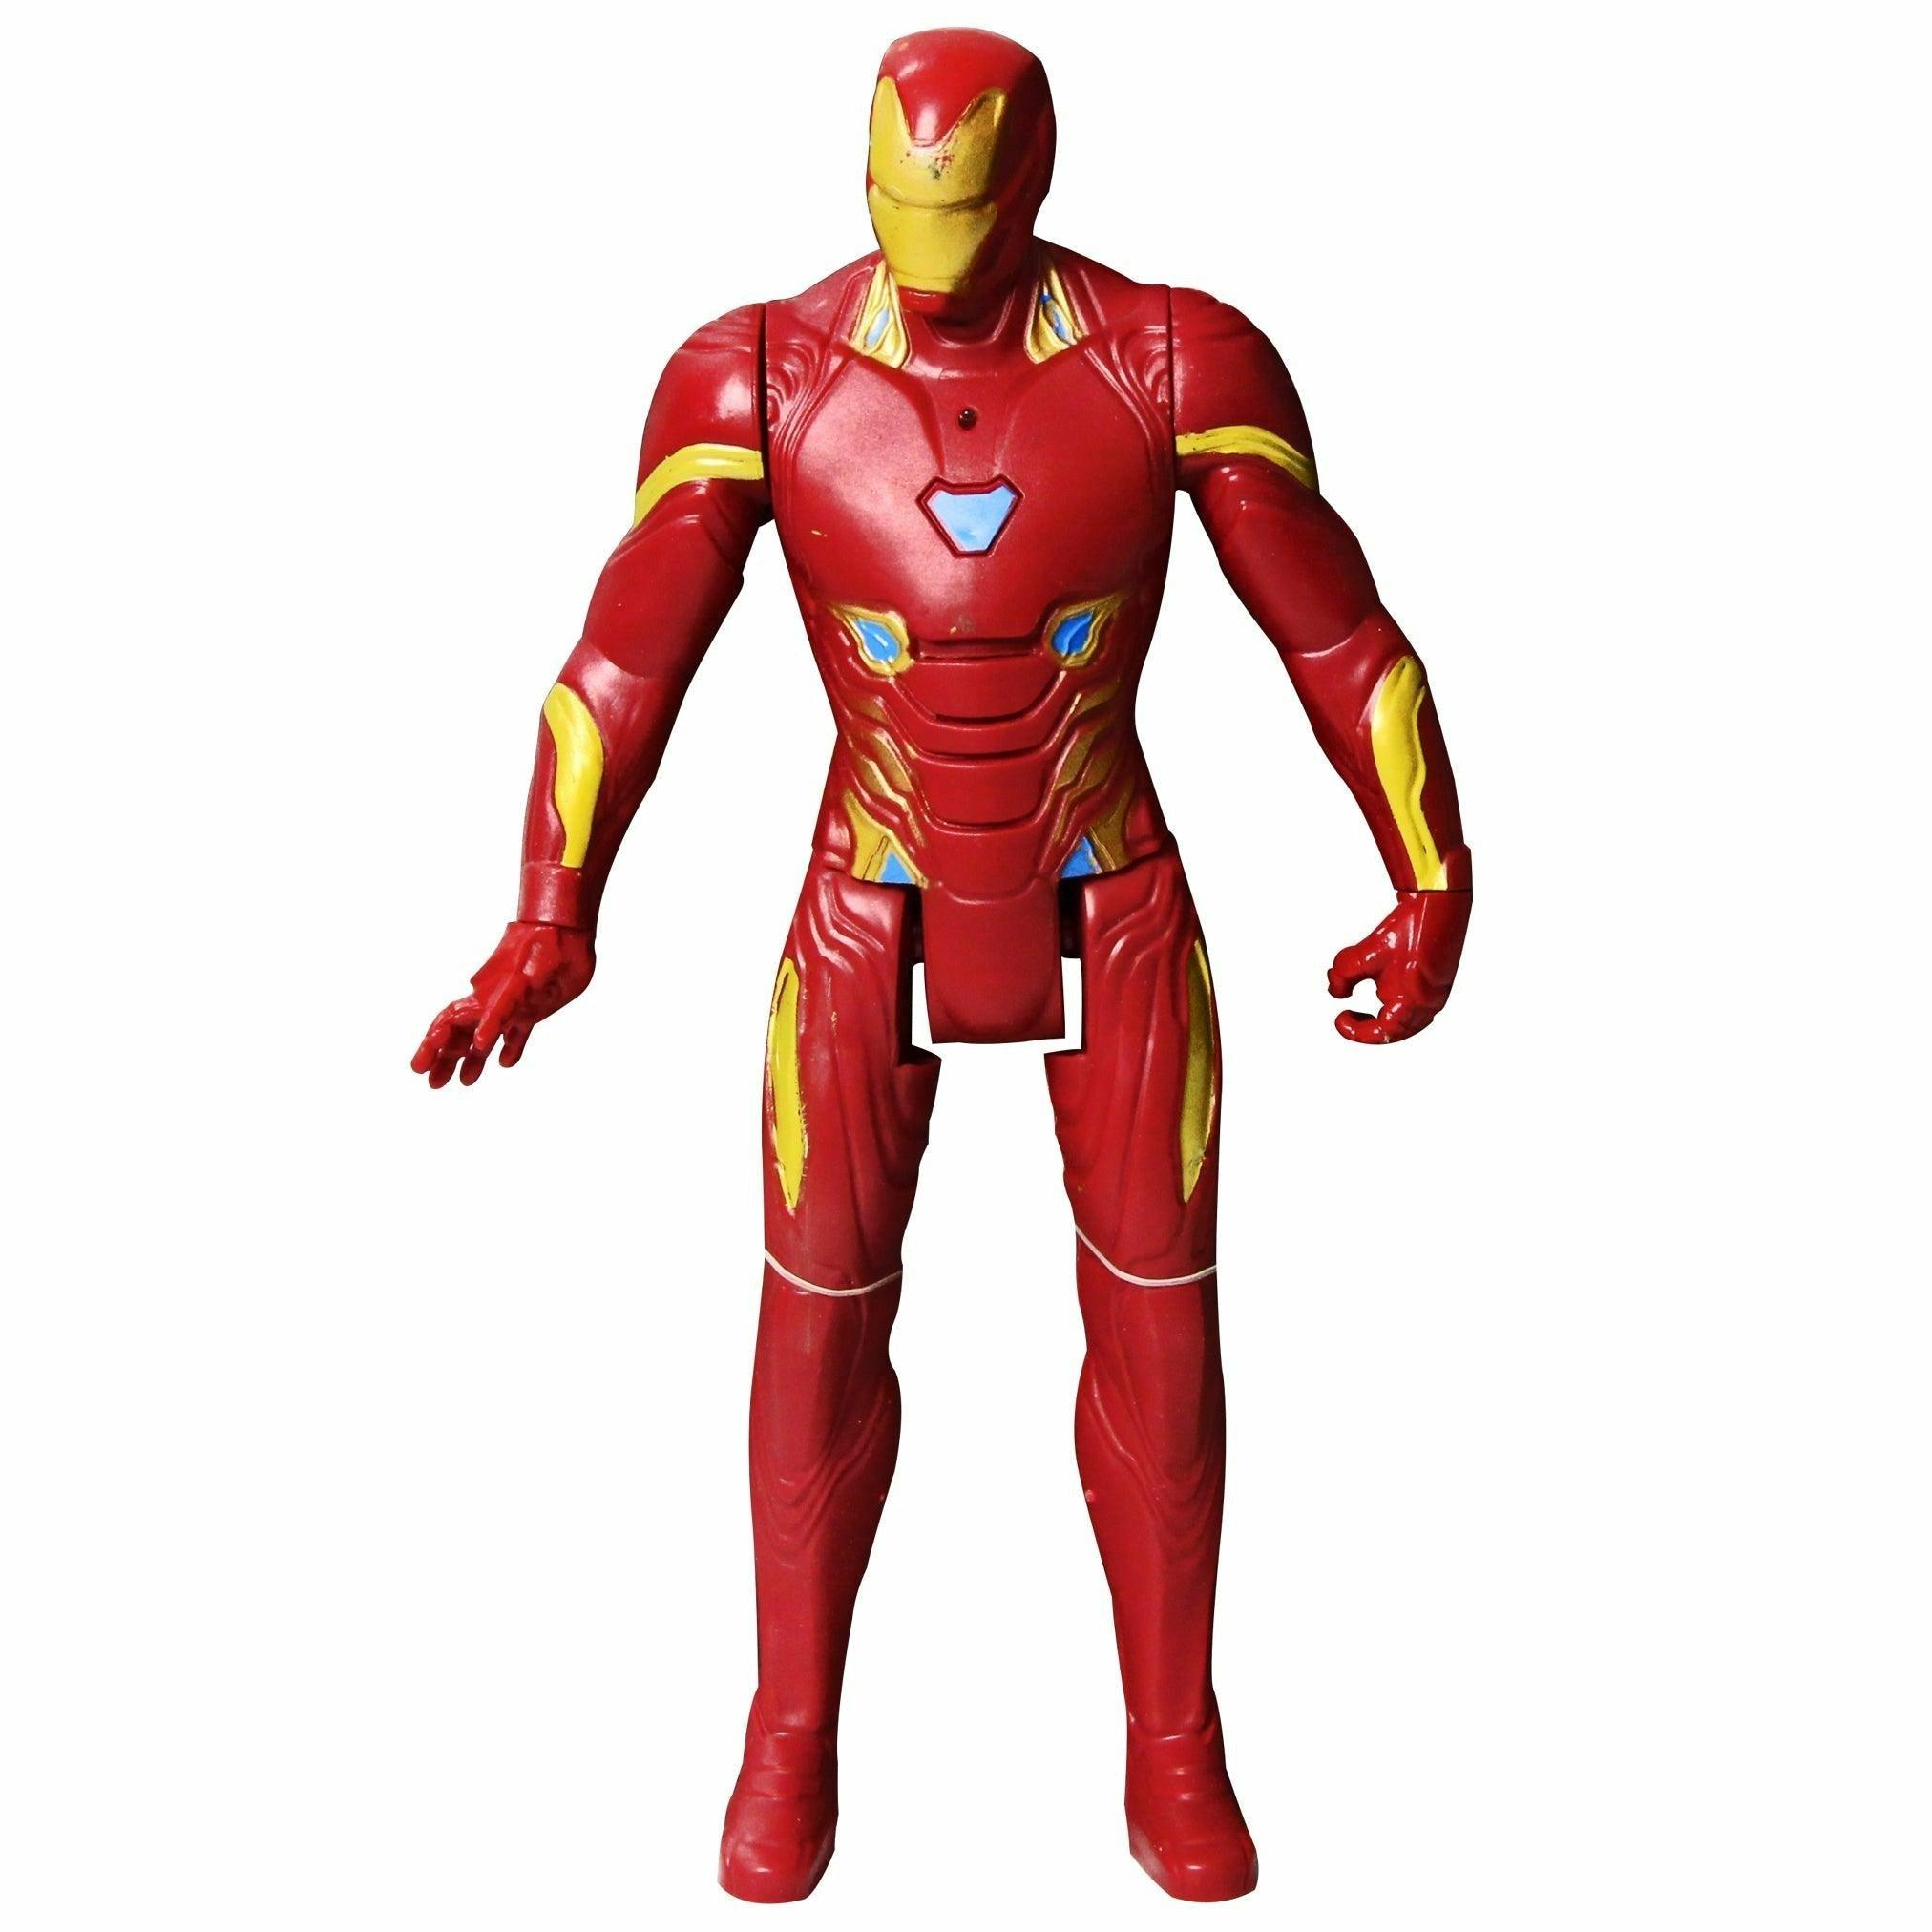 Avengers Union Legend Super Hero Action Figure - Iron Man - BumbleToys - 5-7 Years, Action Figures, Avengers, Boys, Characters, Figures, Iron man, Toy Land